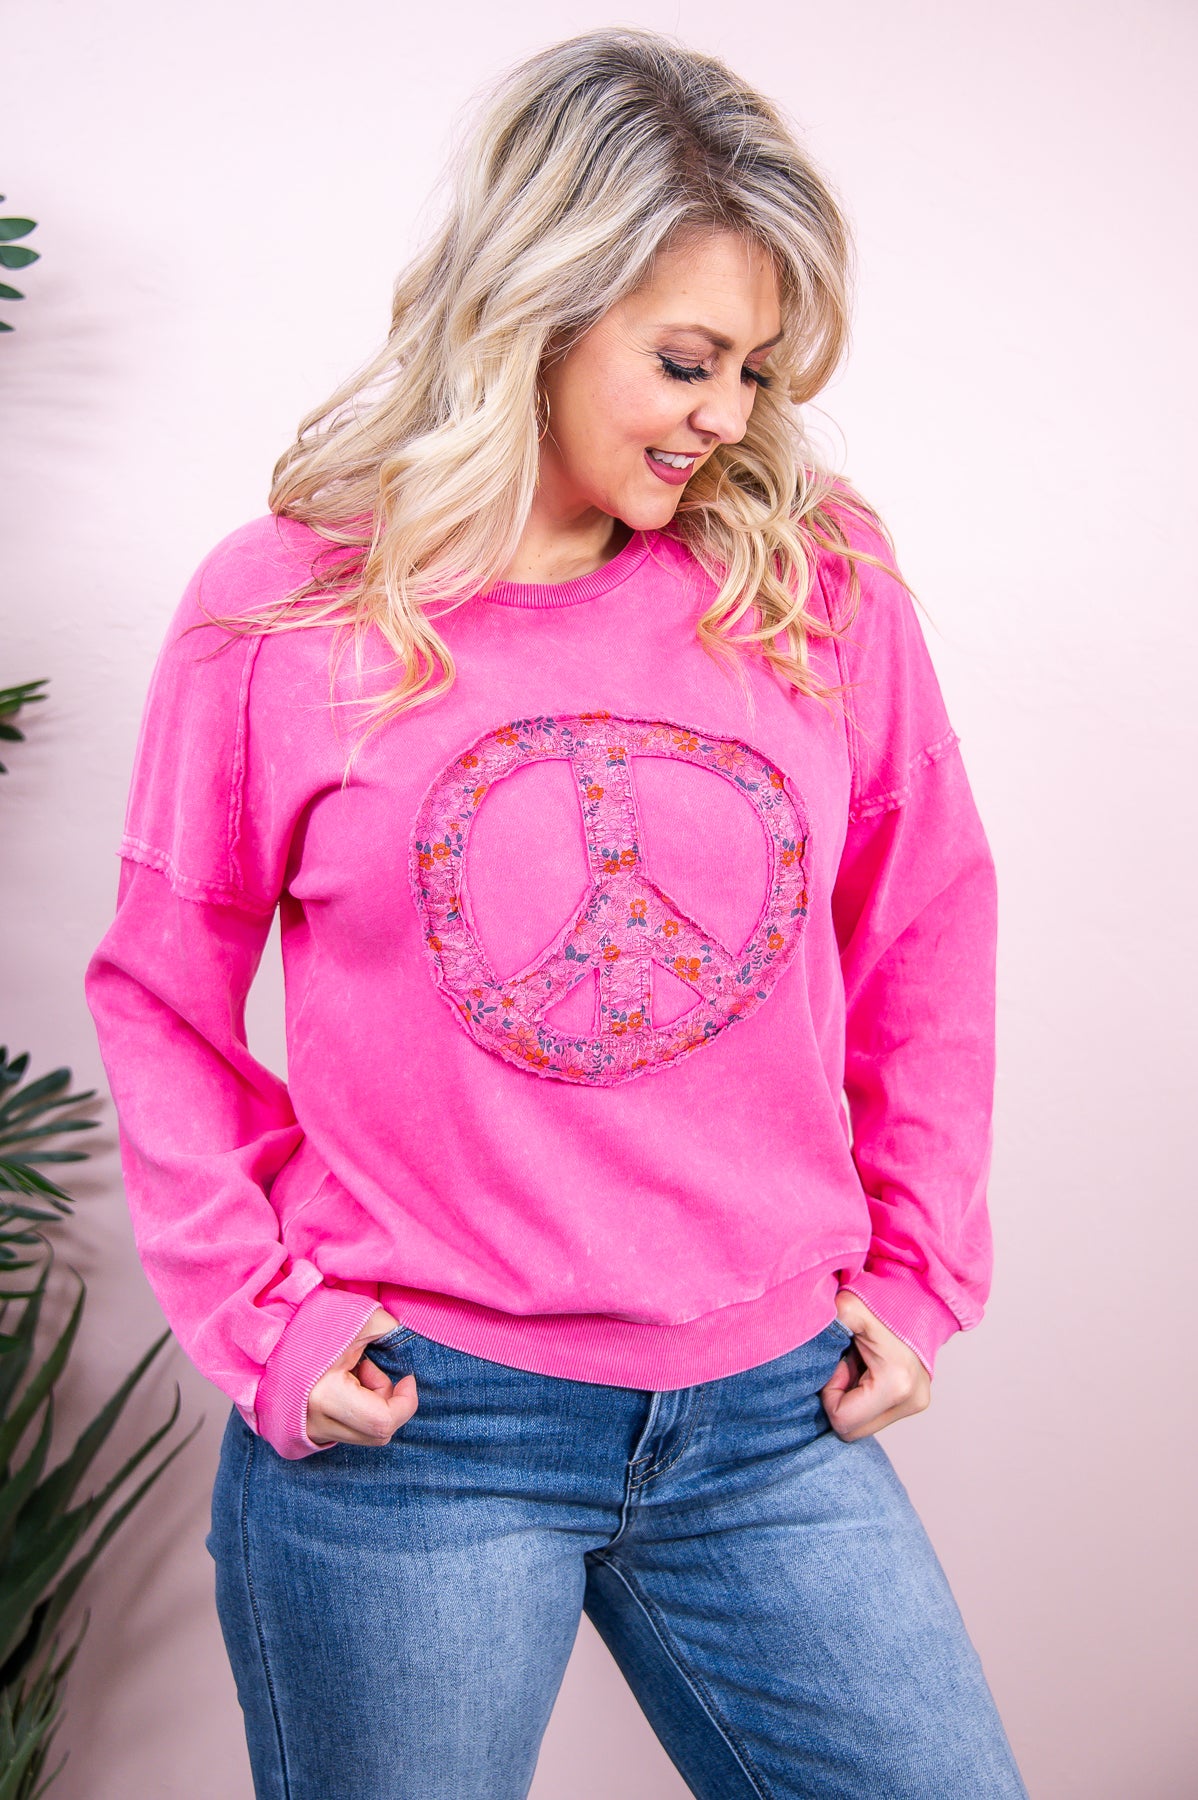 Hippie Chic Vintage Pink/Multi Color Peace Sign/Floral Top - T8721VPK